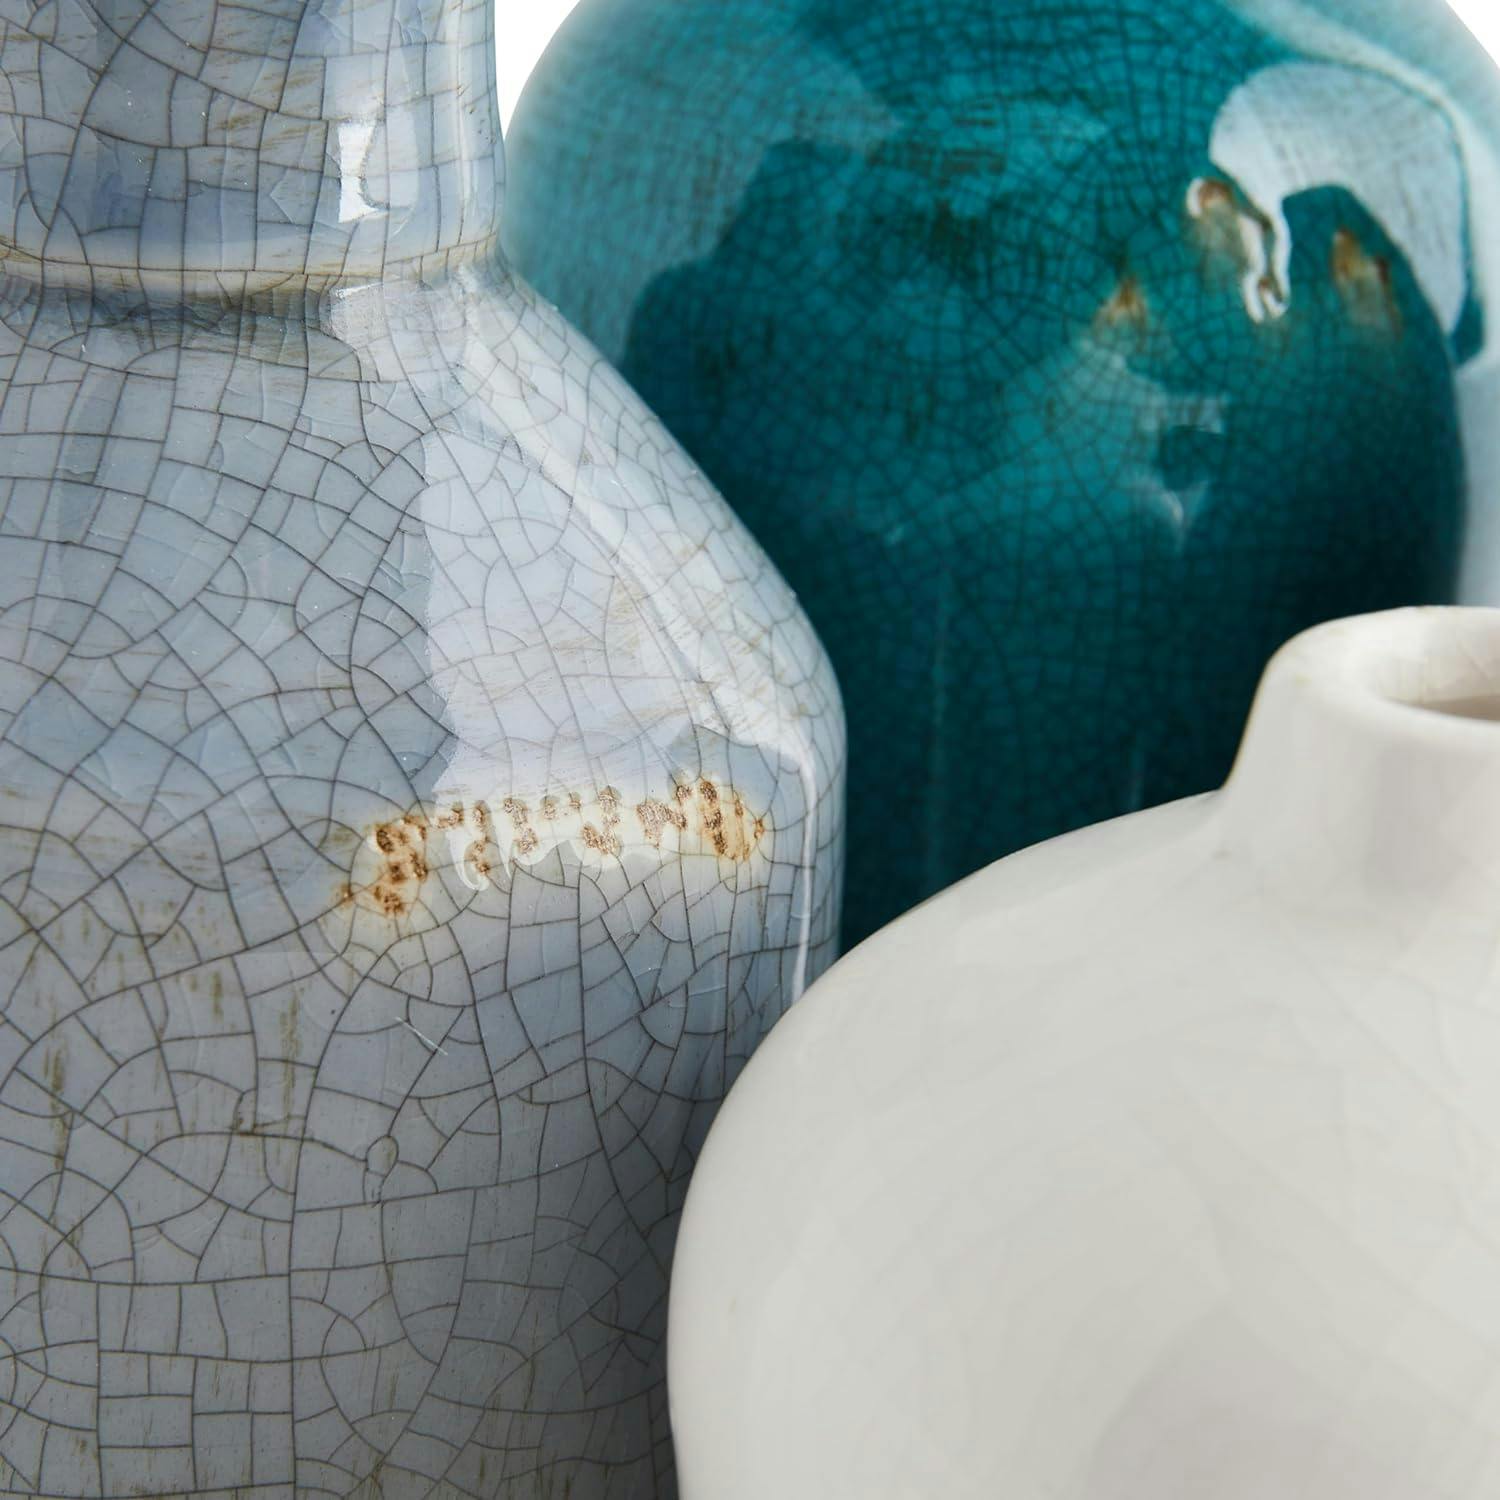 Artisan Blue Crackle Glaze Terracotta Vase Set of 4